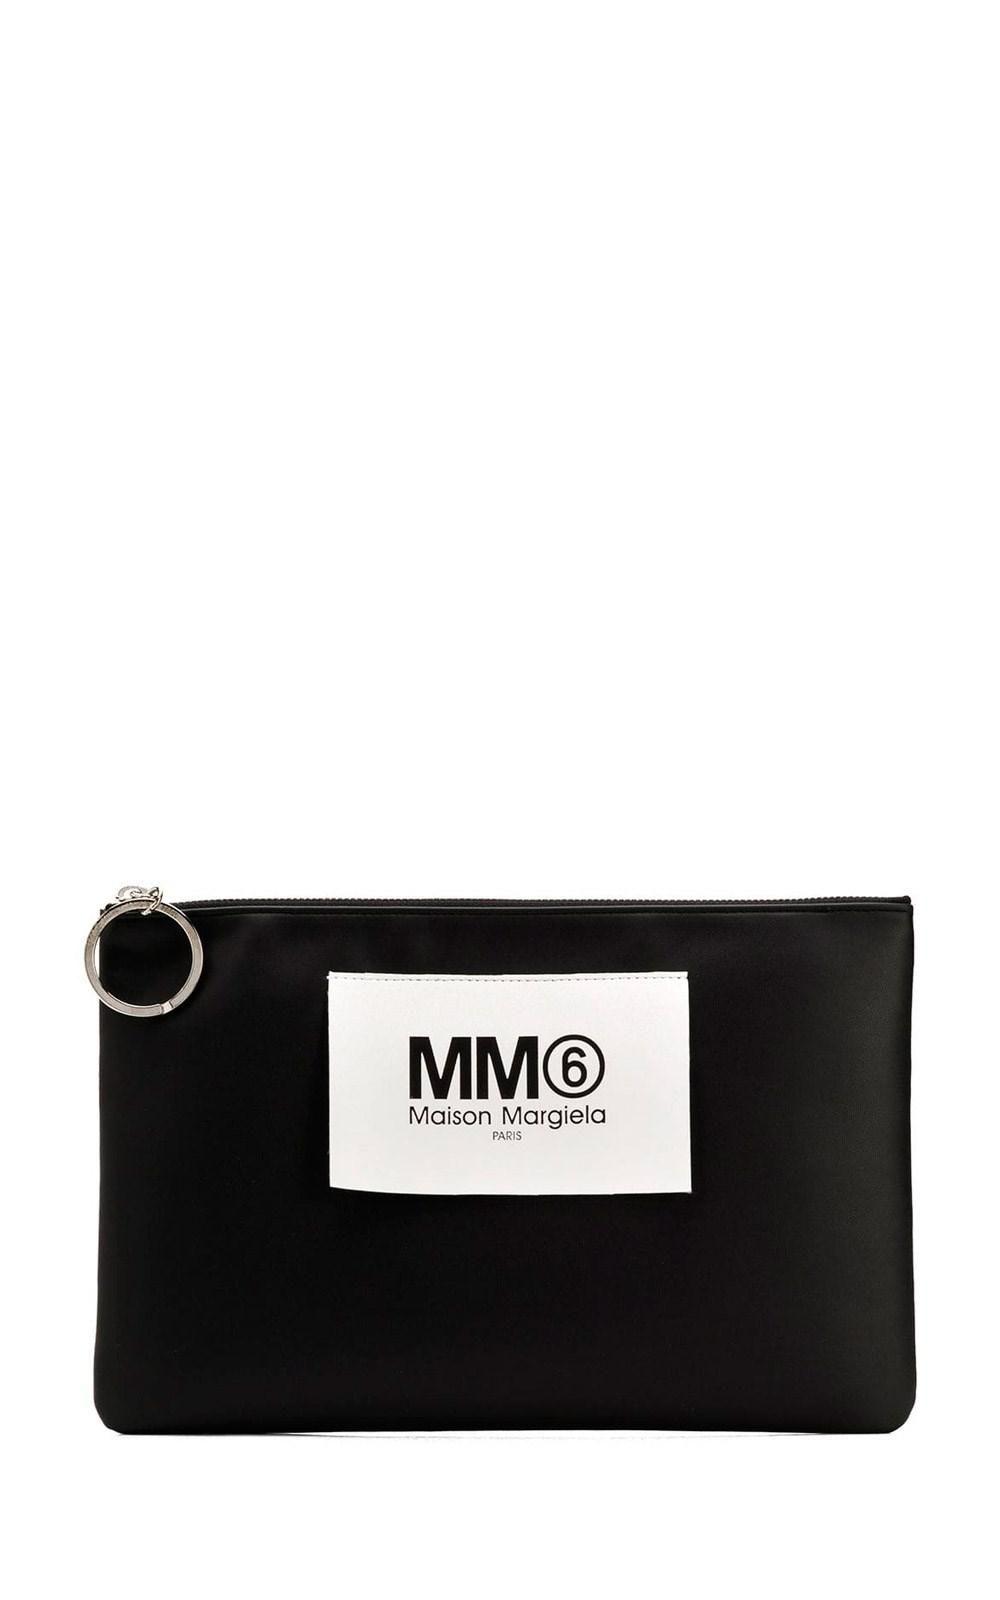 MM6 Maison Martin Margiela Logo - Mm6 By Maison Martin Margiela Logo Leather Clutch in Black